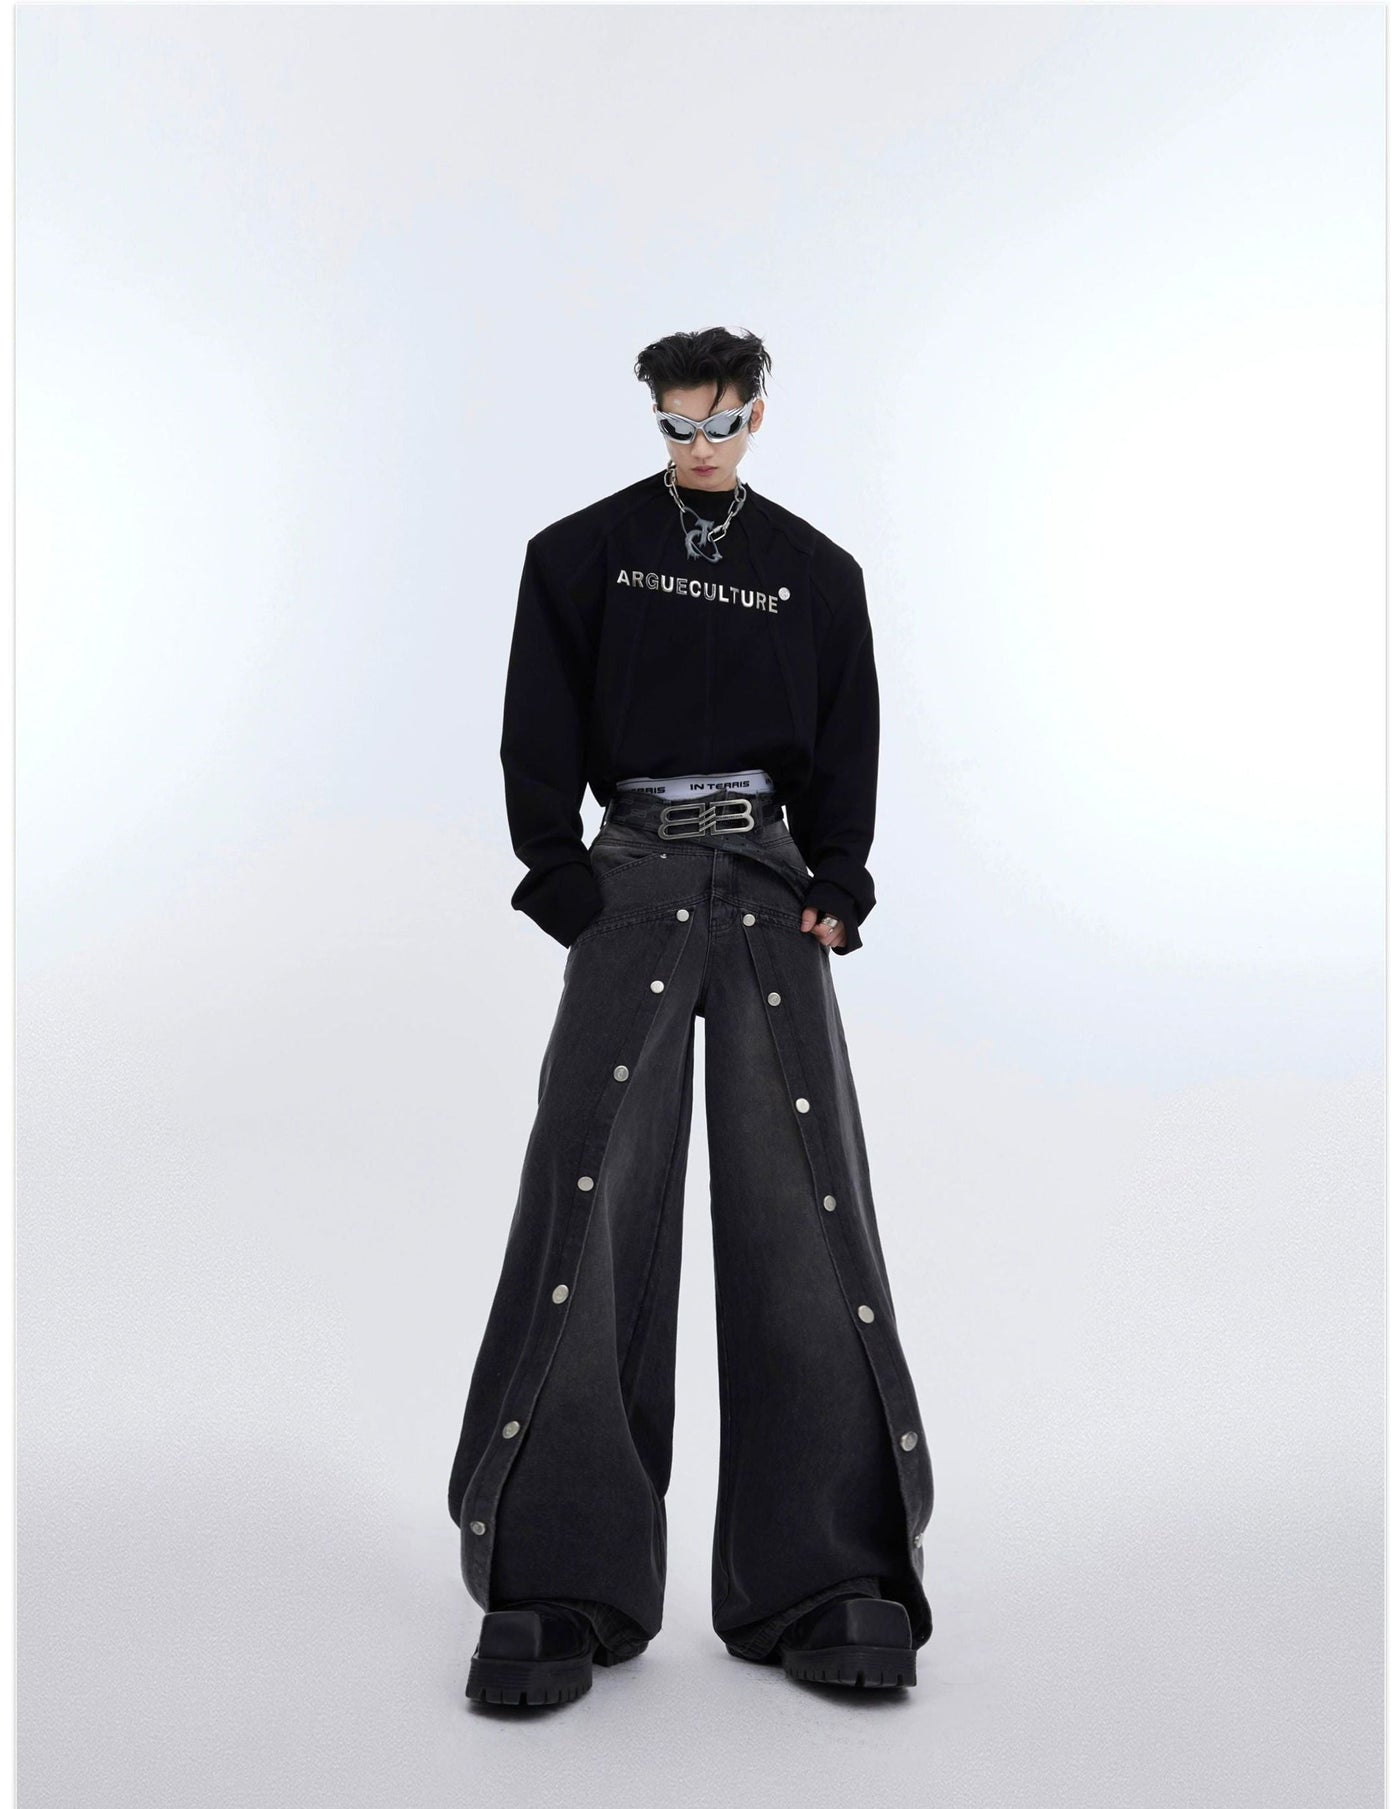 Washed Layer Details Jeans Korean Street Fashion Jeans By Argue Culture Shop Online at OH Vault